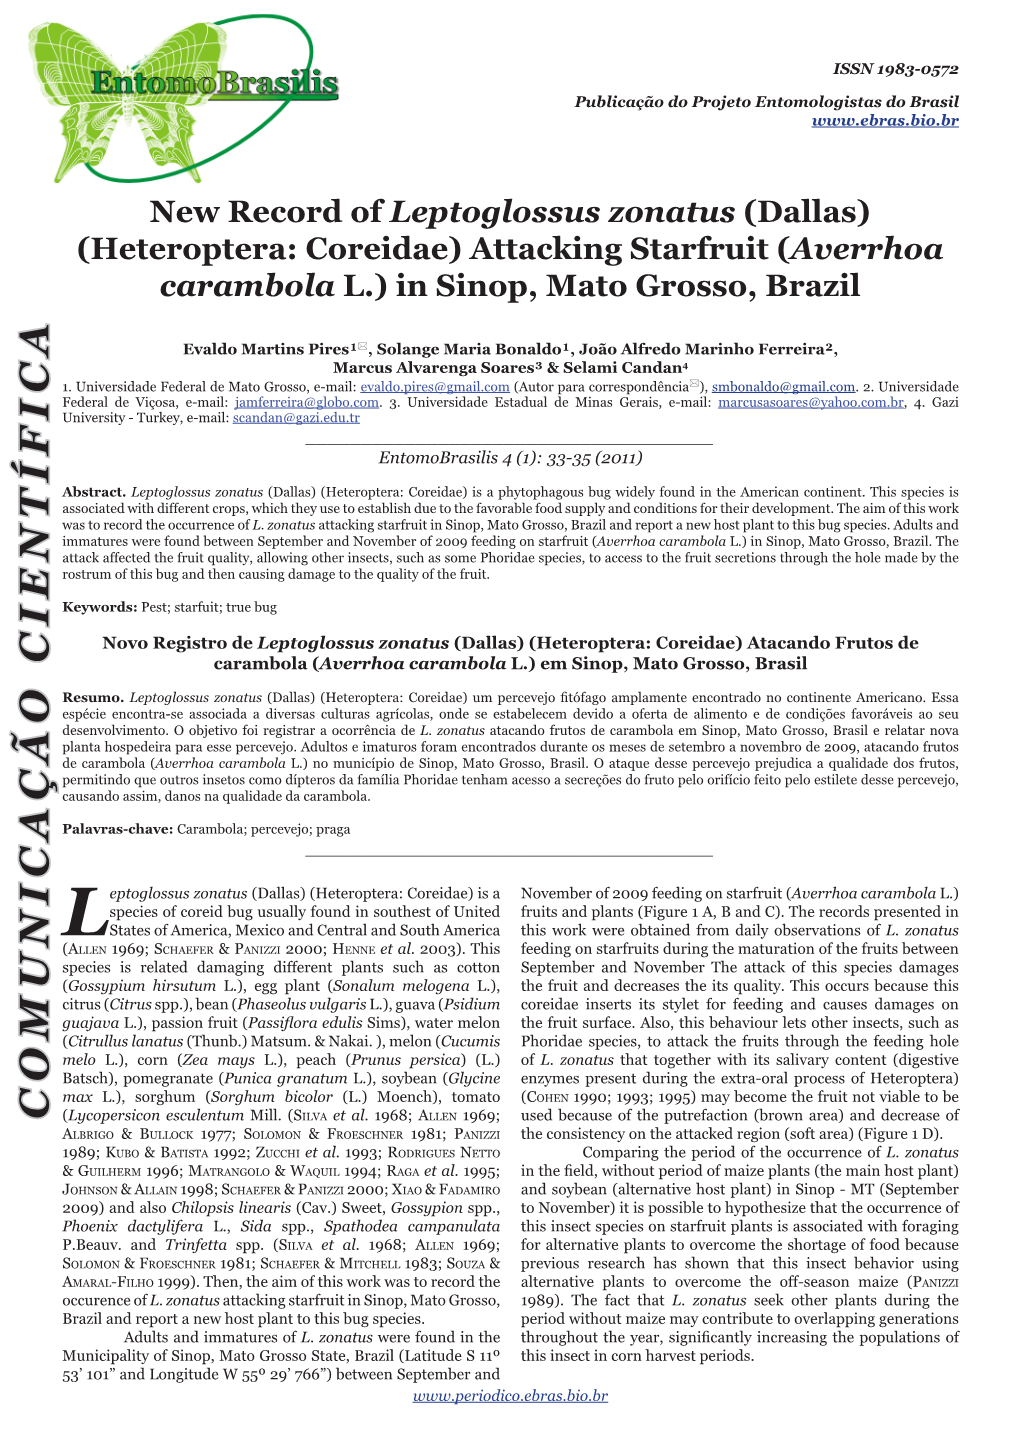 New Record of Leptoglossus Zonatus (Dallas) (Heteroptera: Coreidae) Attacking Starfruit (Averrhoa Carambola L.) in Sinop, Mato Grosso, Brazil